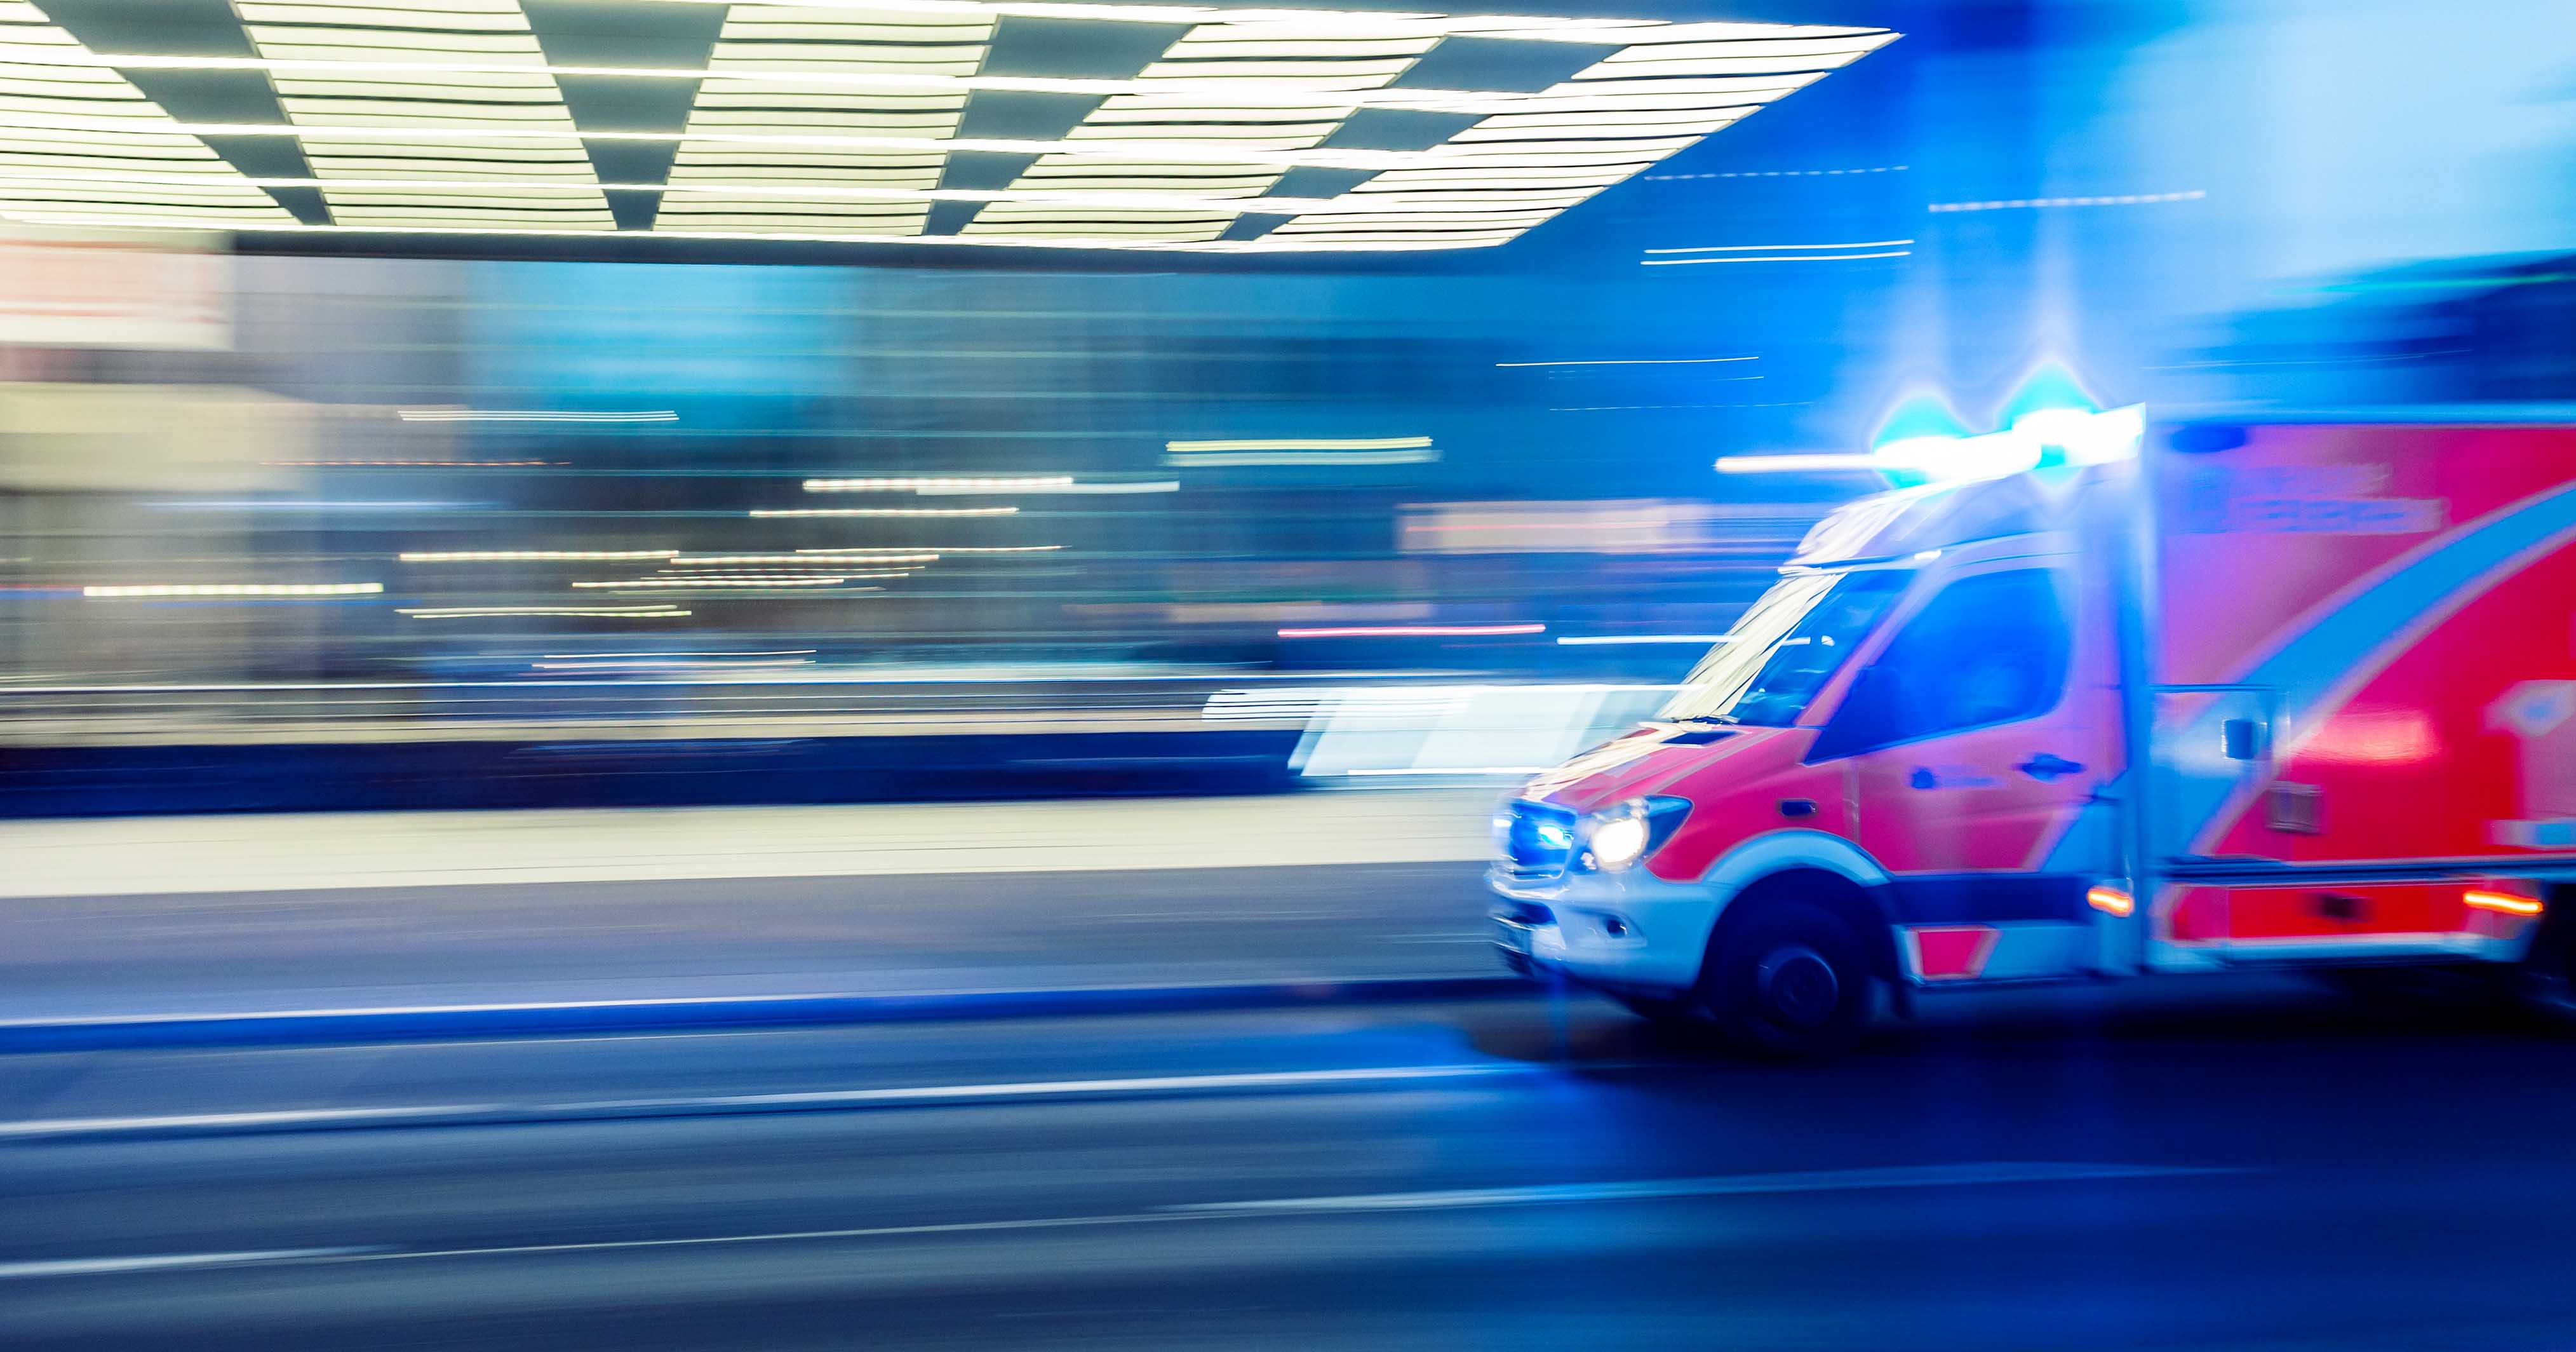 An image of a speeding ambulance.